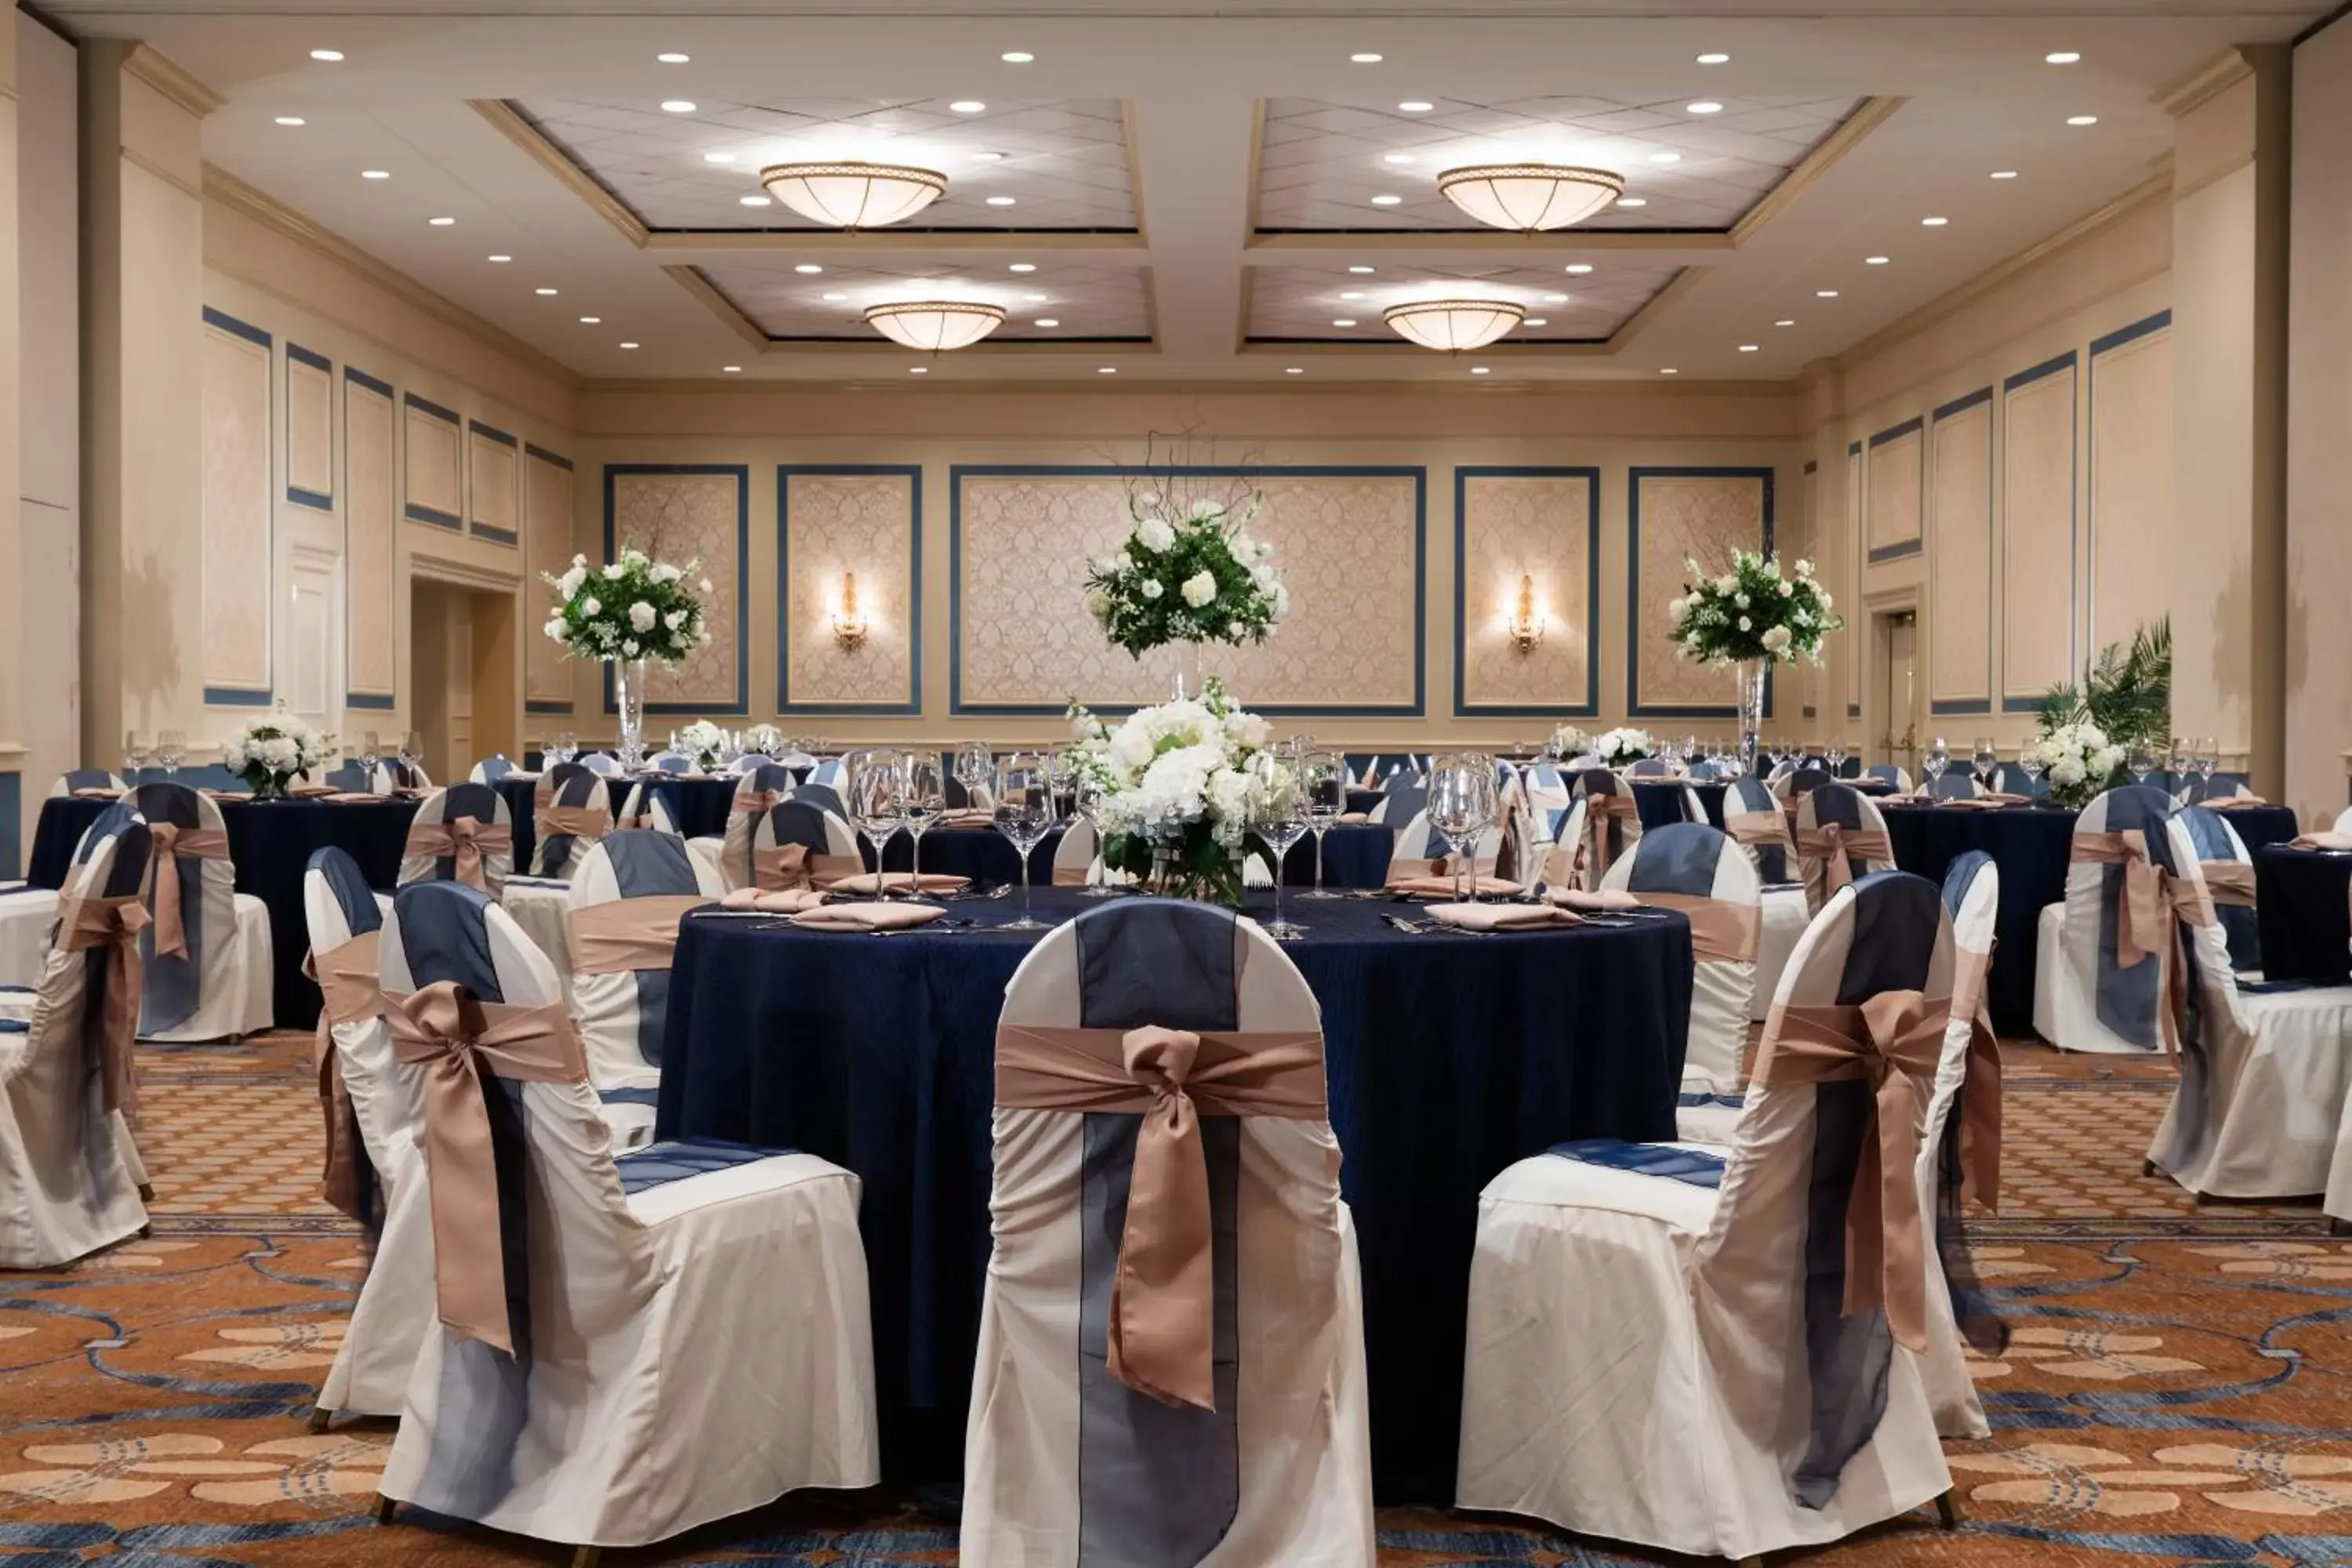 Banquet/Function facilities, Banquet Facilities in Francis Marion Hotel